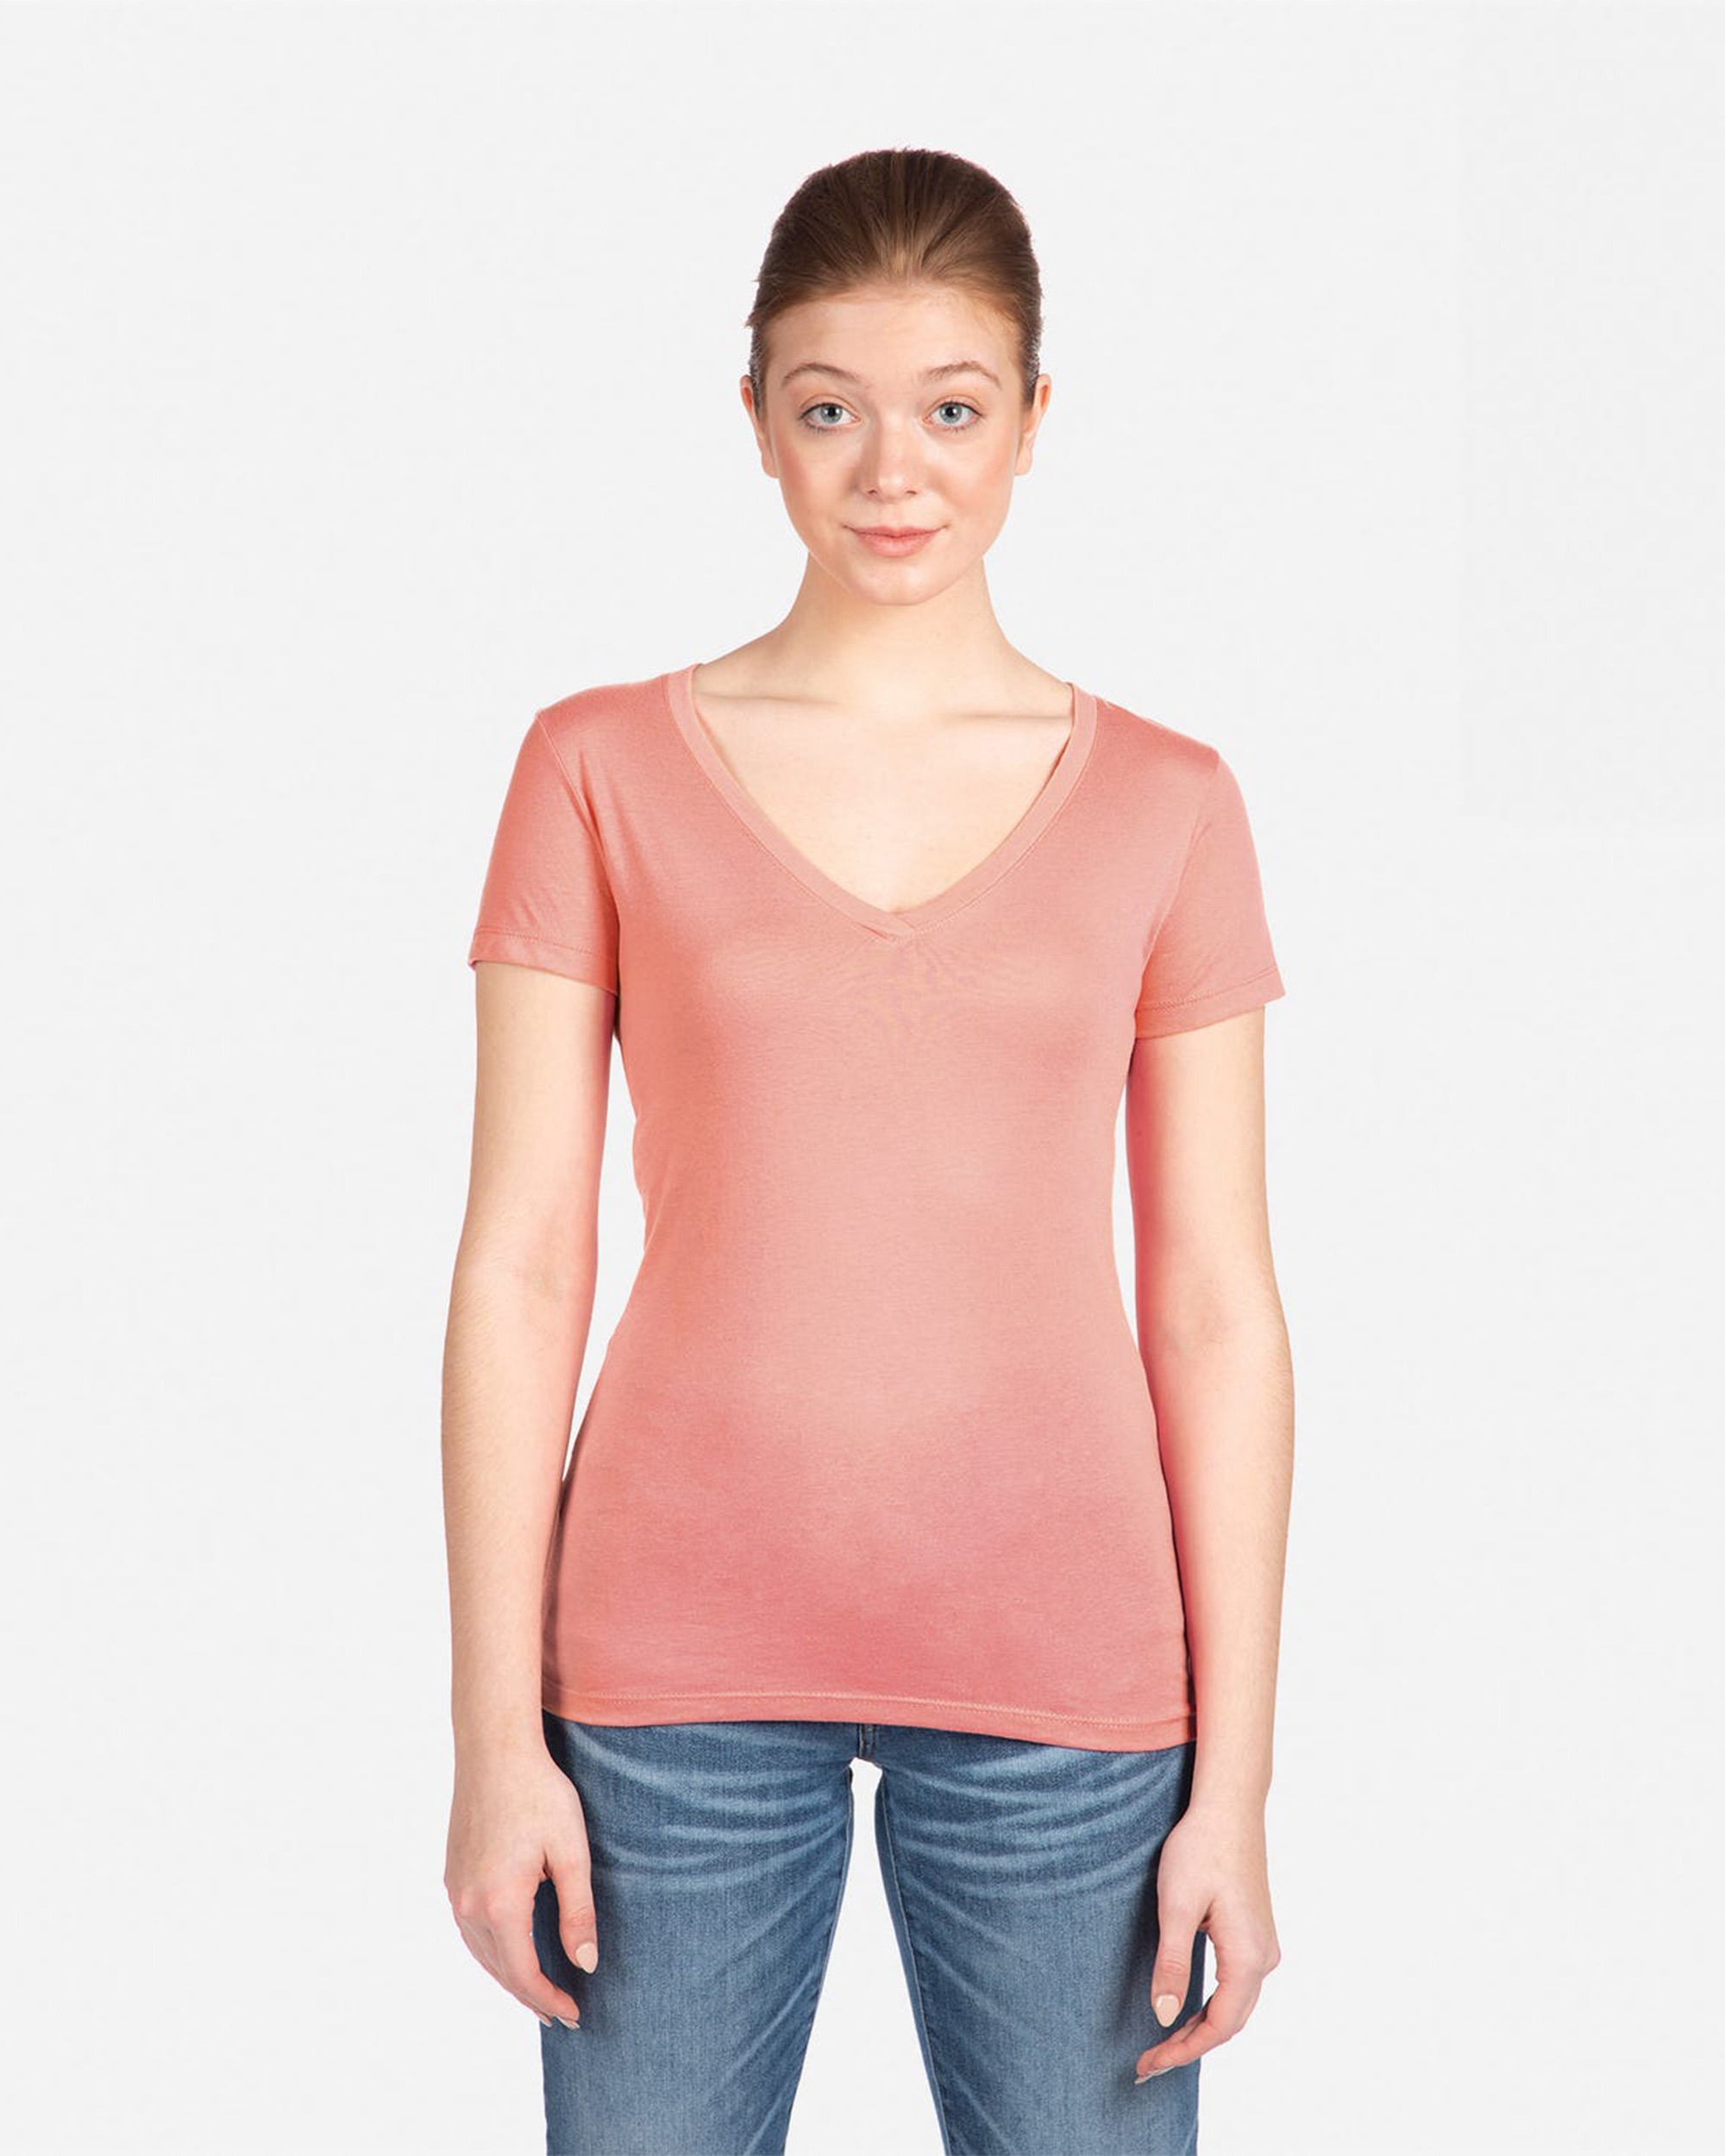 Next Level Apparel® 1540 Women's Ideal V-Neck T-Shirt